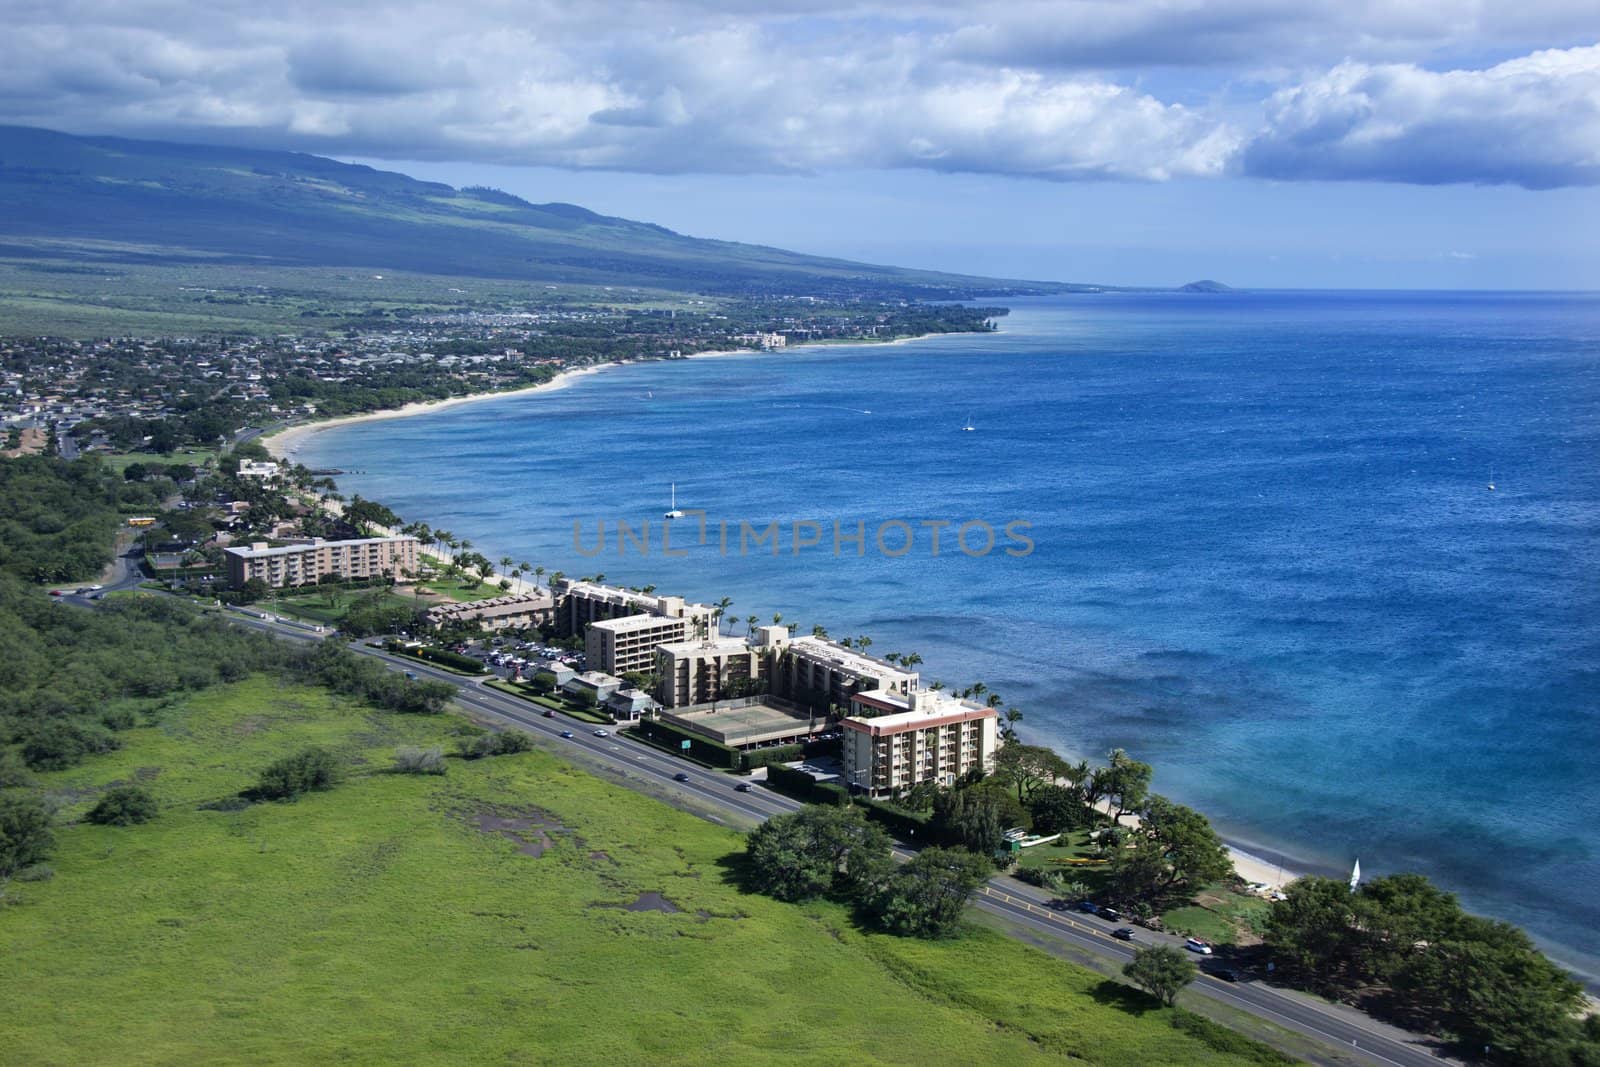 Aerial of Maui, Hawaii coastline with hotel resorts.